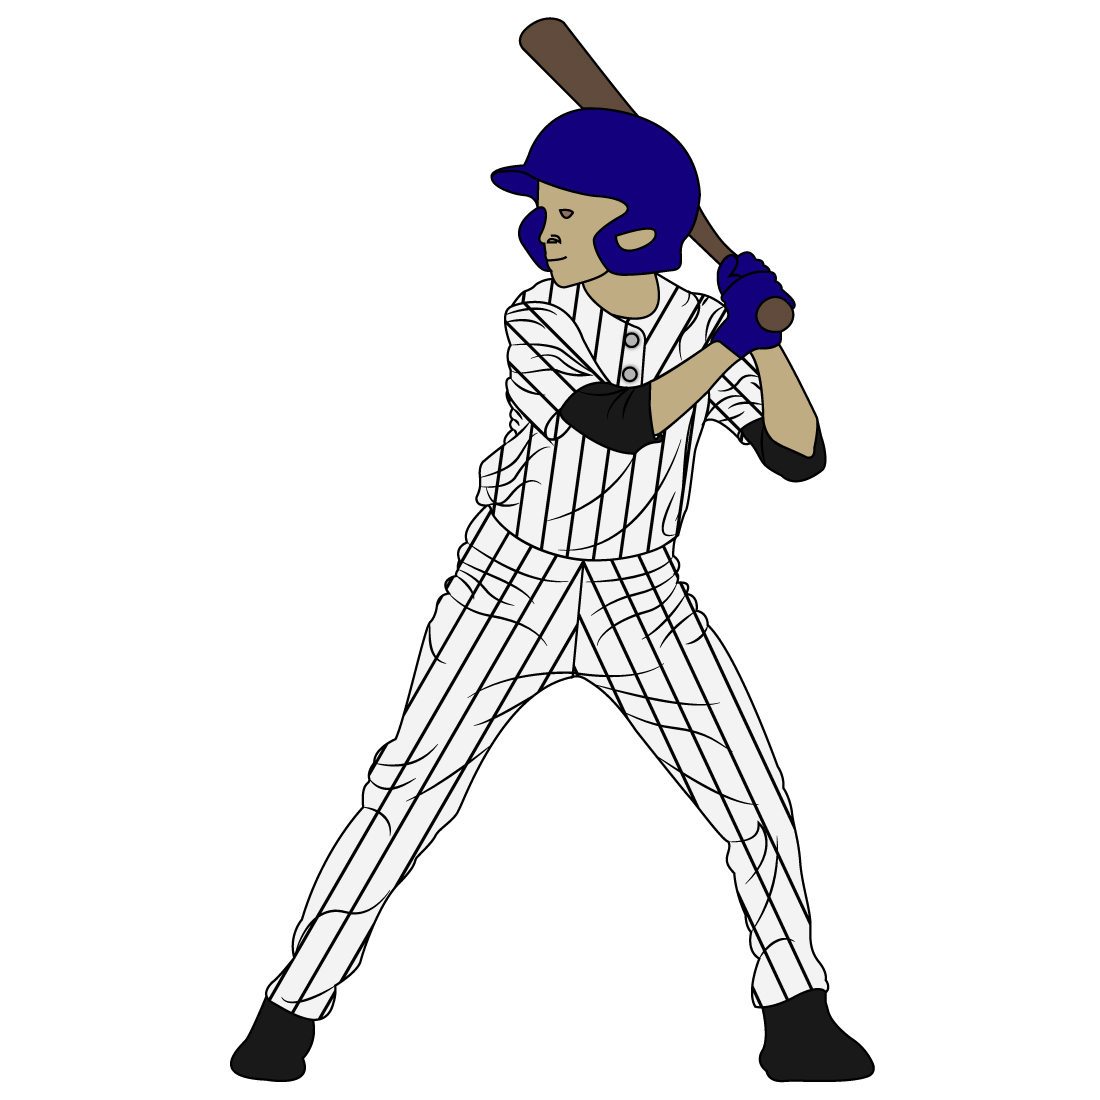 Baseball Players Actions - TShirt Print Design preview image.